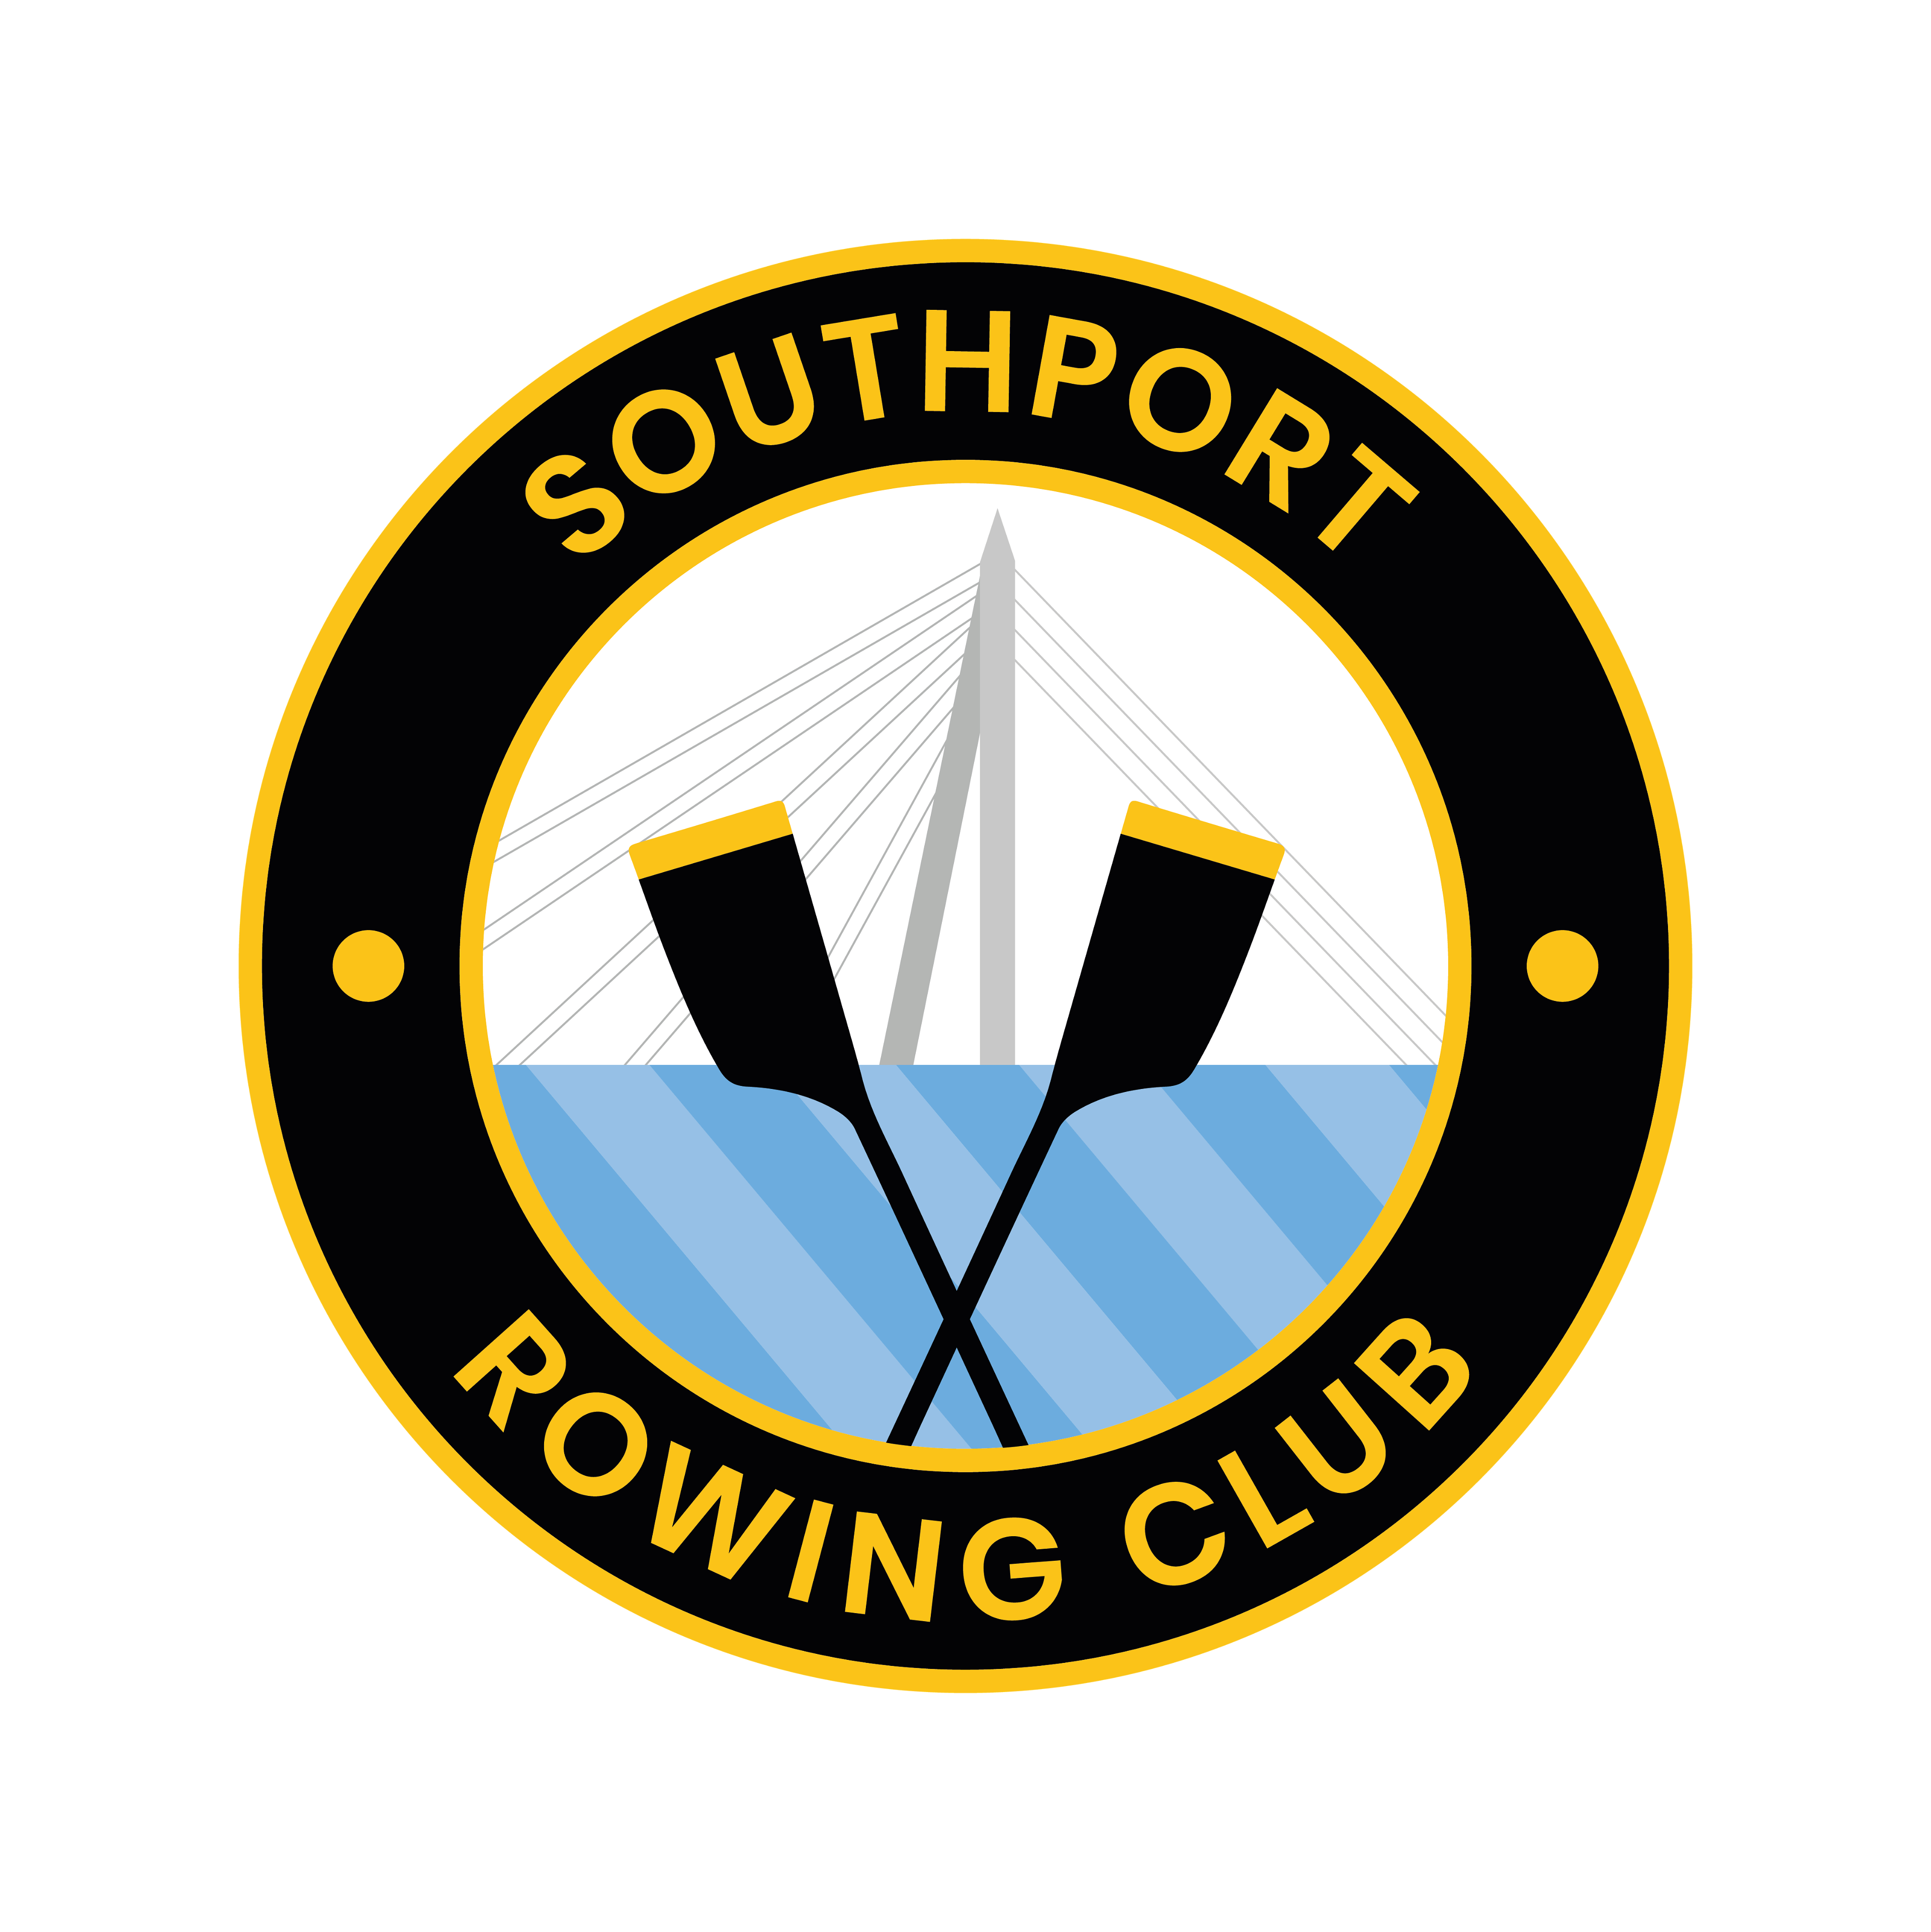 Southport Rowing Club logo